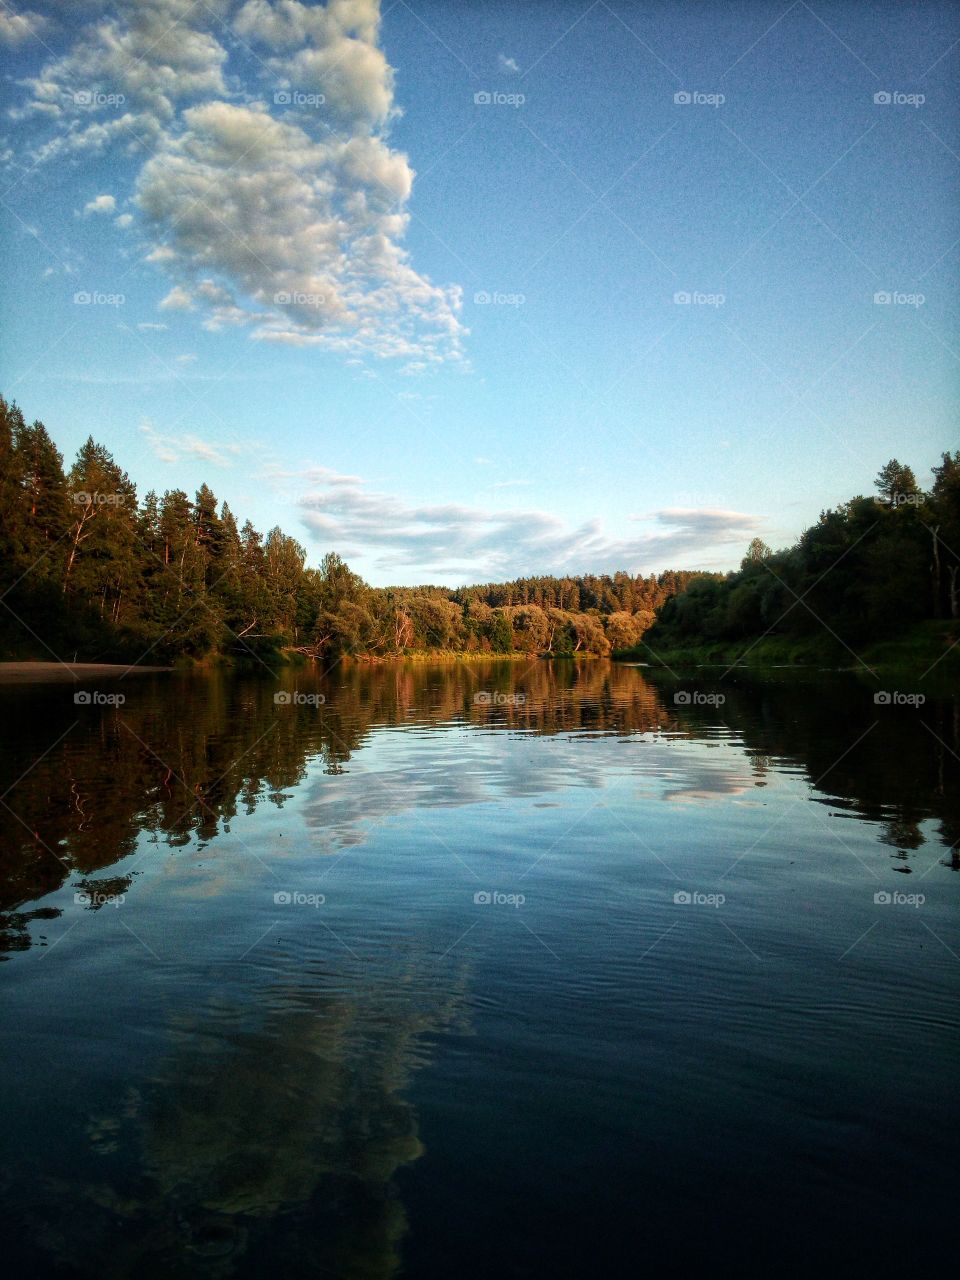 River. Nature. Peace.